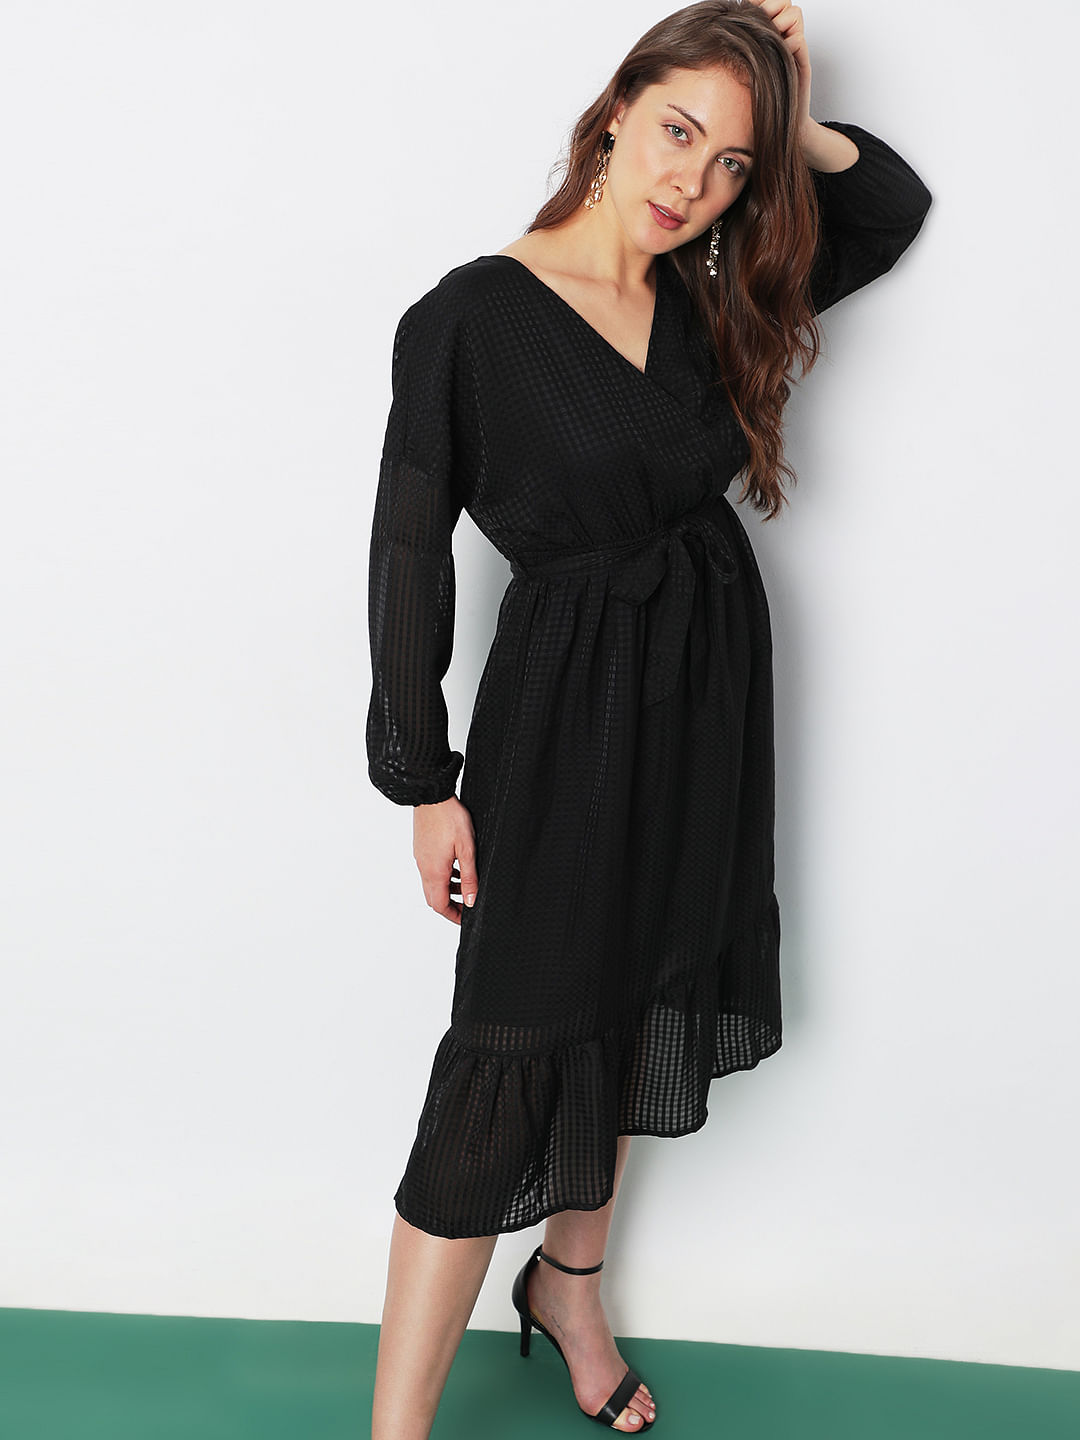 Black Satin Dress - Black Midi Dress - Sexy Backless Dress - Lulus